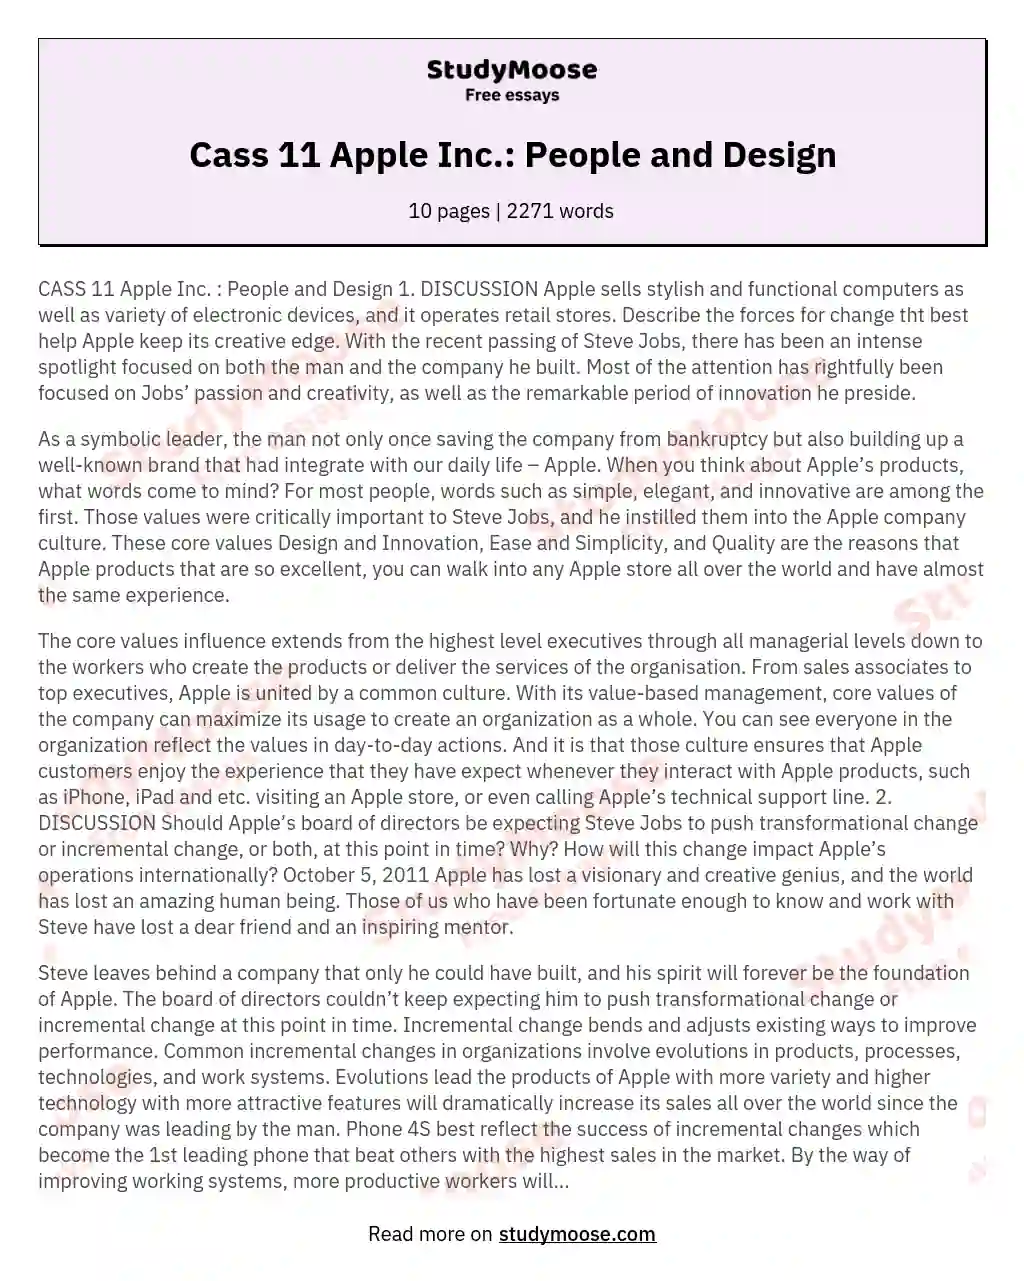 Cass 11 Apple Inc.: People and Design essay